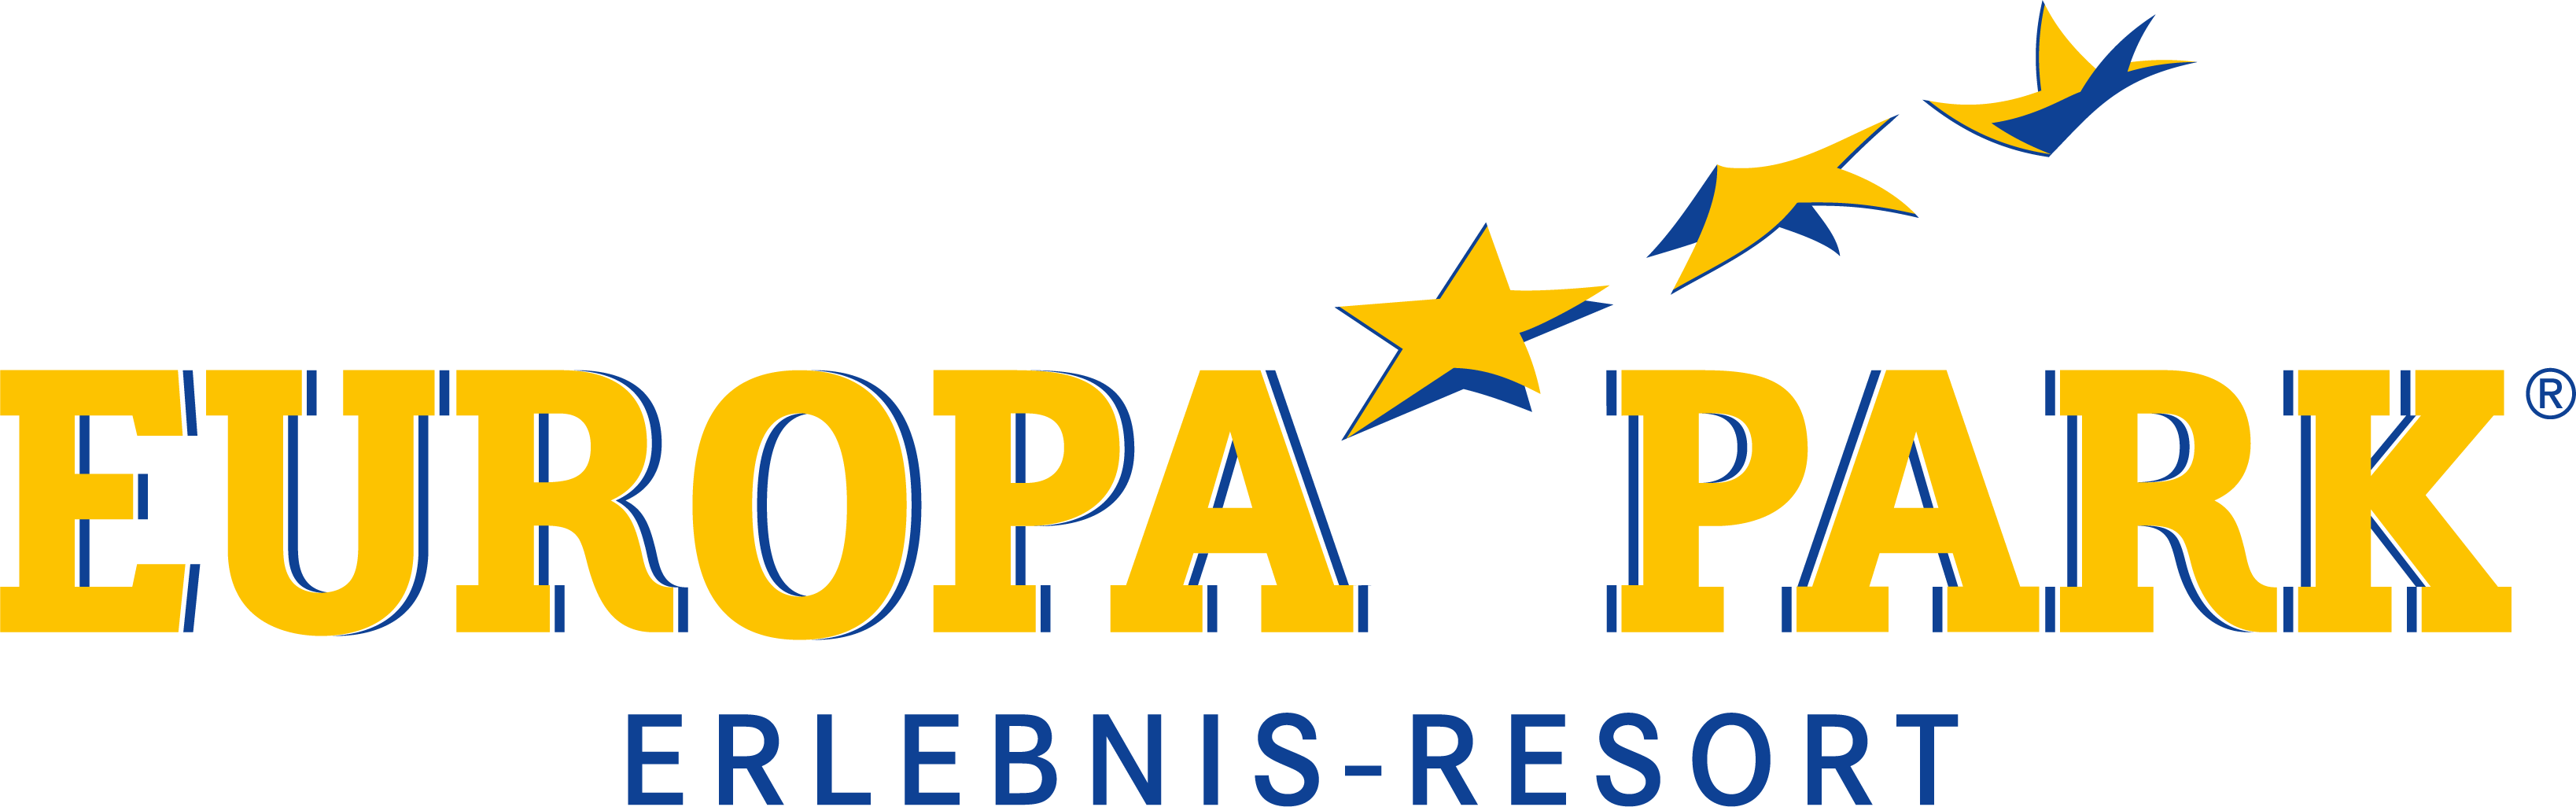 Europaprk_Logo